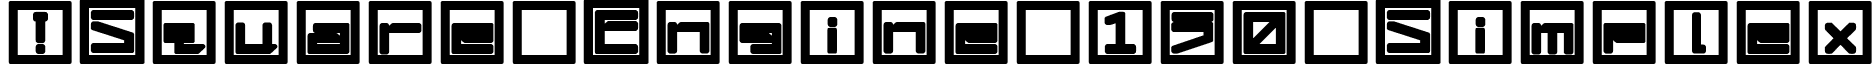 !Square Engine 150 Simplex font - !SE150 Bold.ttf